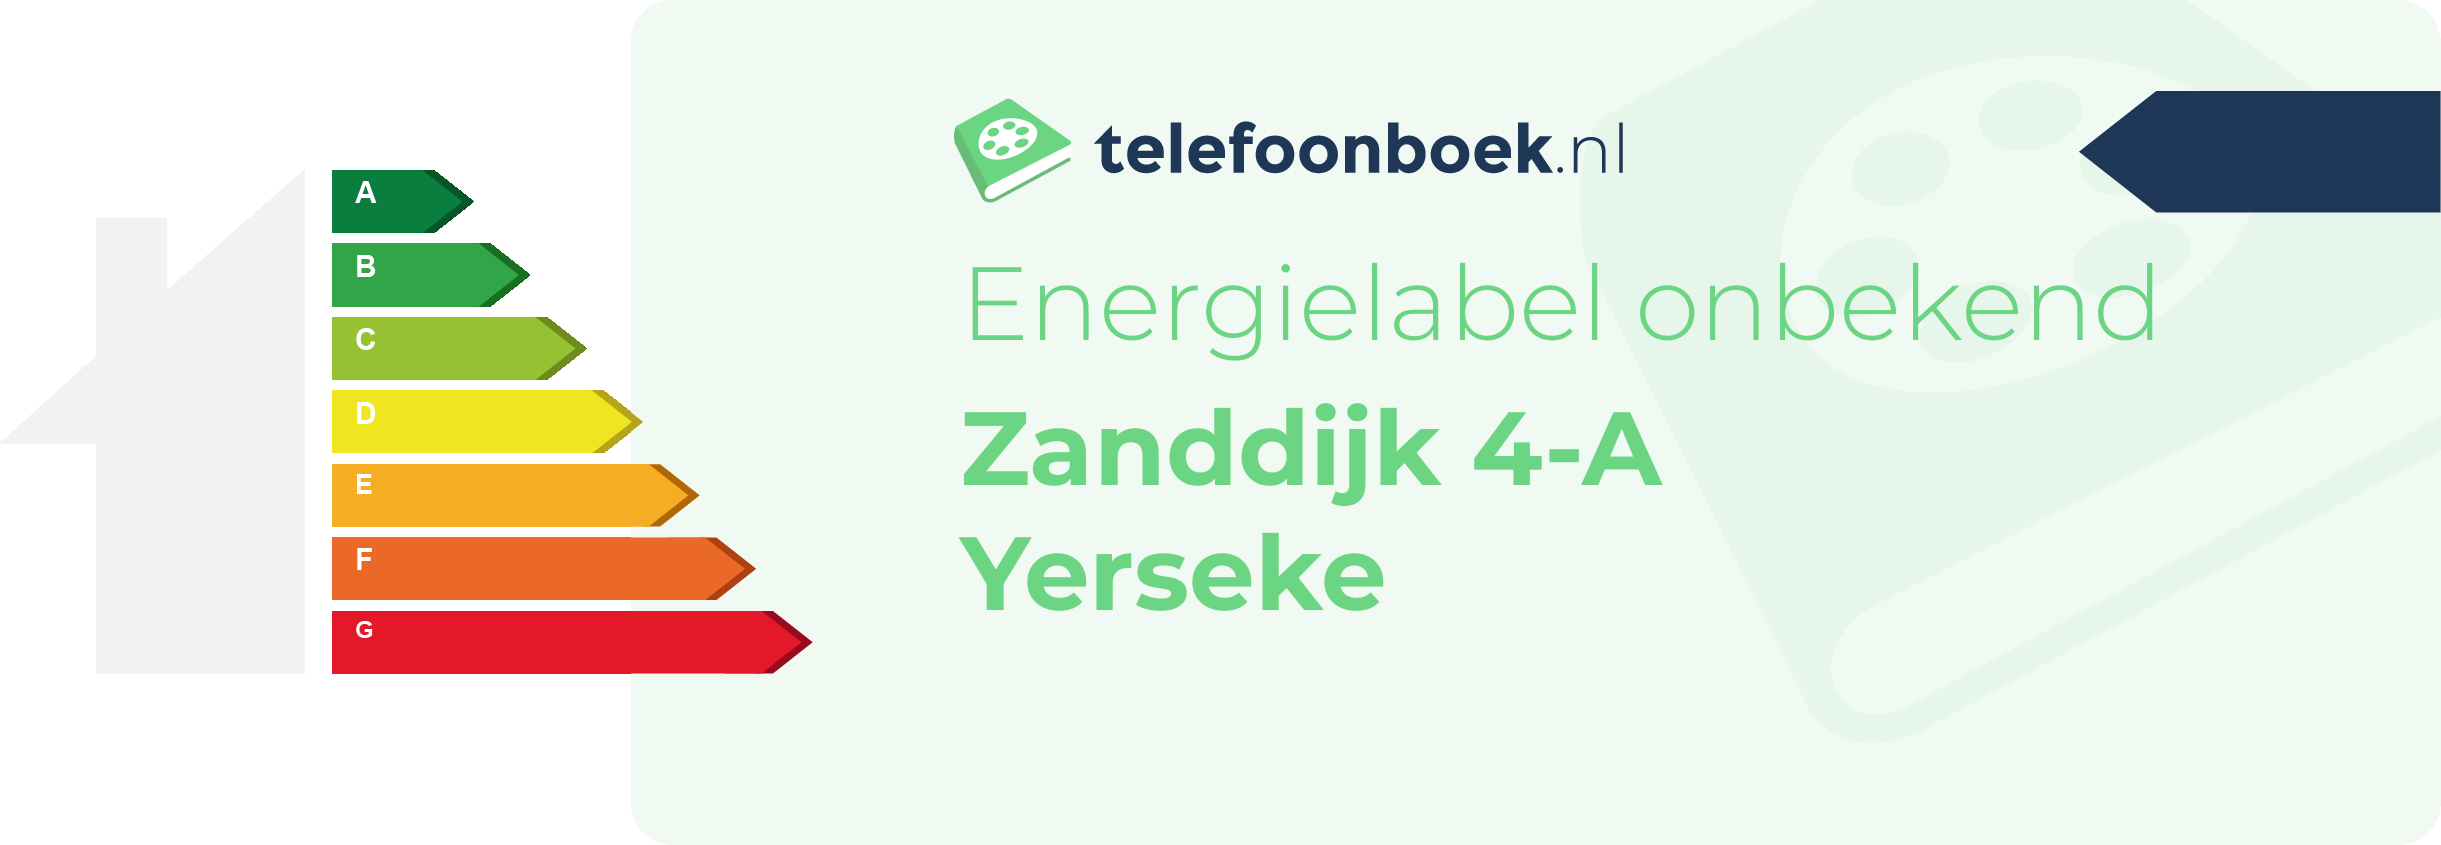 Energielabel Zanddijk 4-A Yerseke